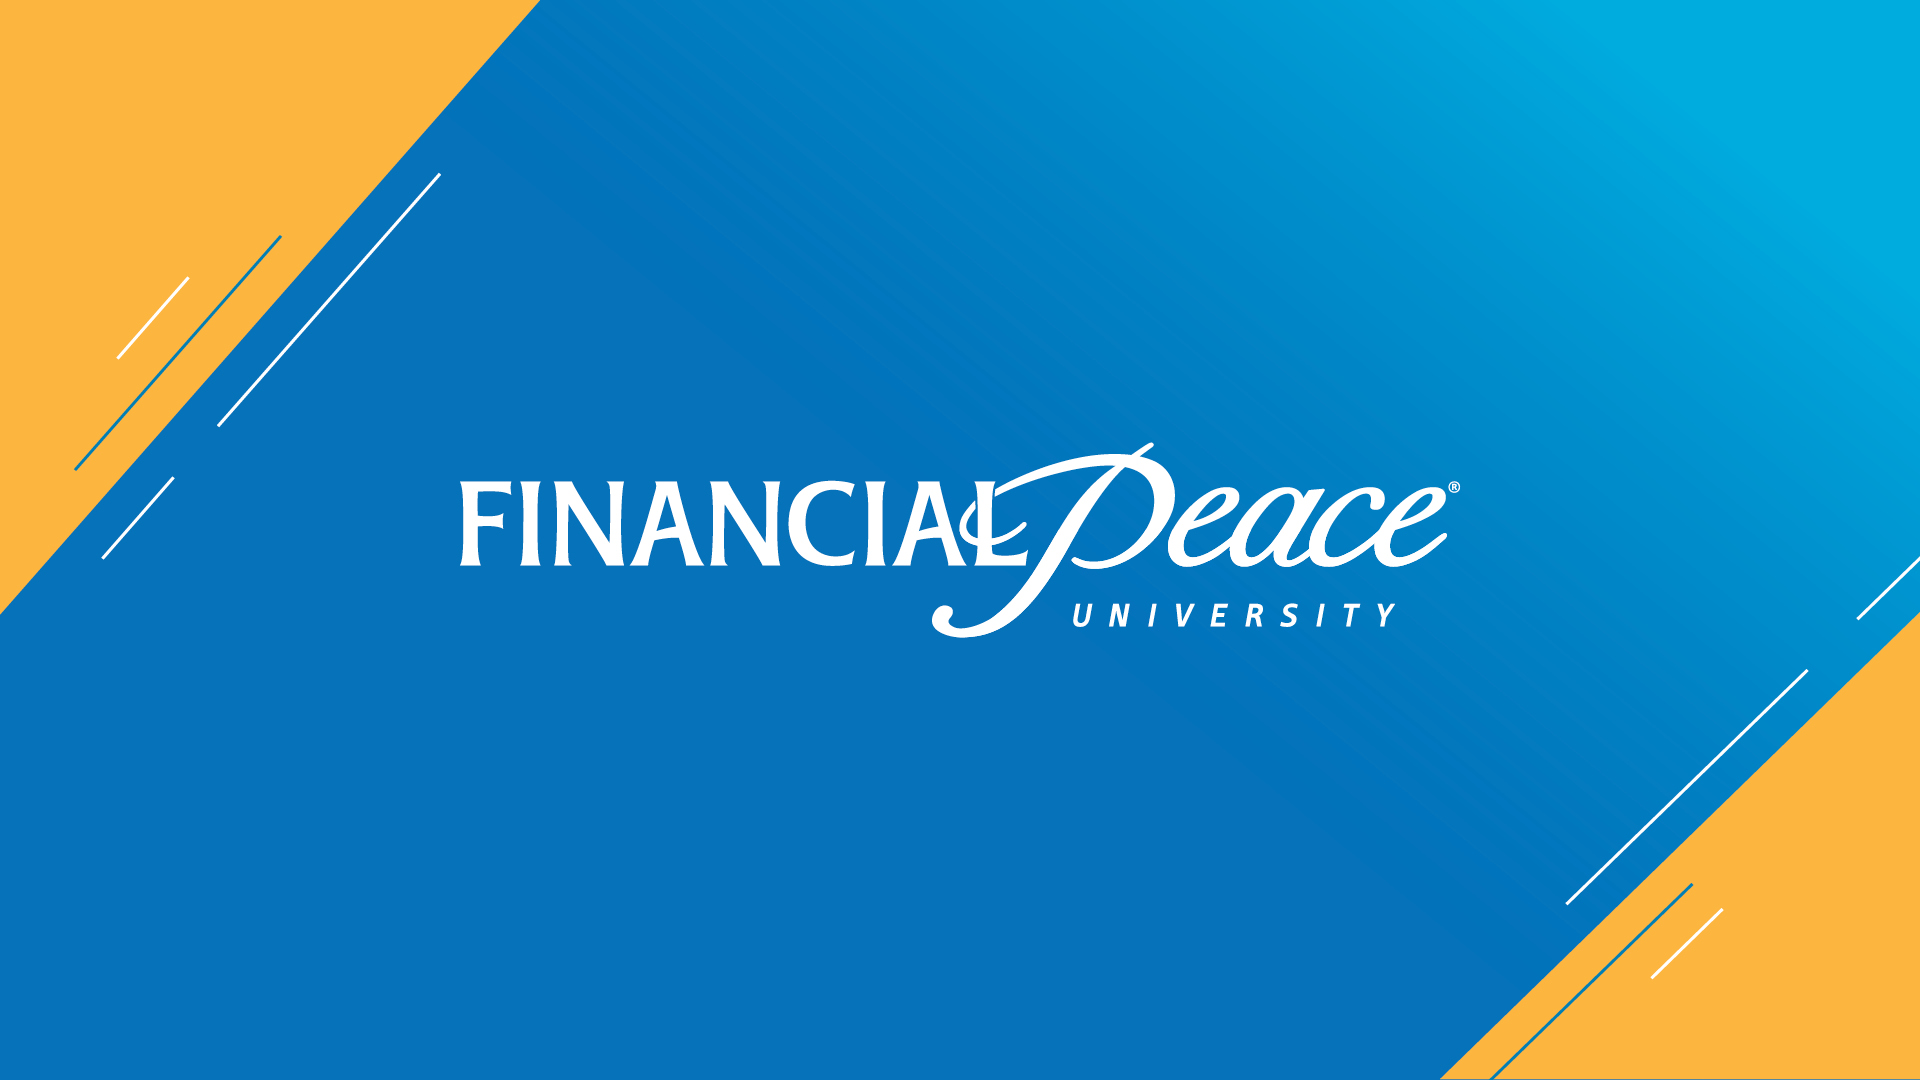 Financial Peace University
February 6–April 11 
Sundays | 8:50–10:20 a.m. | Oak Brook
Mondays | 7:00–9:00 p.m. | Oak Brook
 
